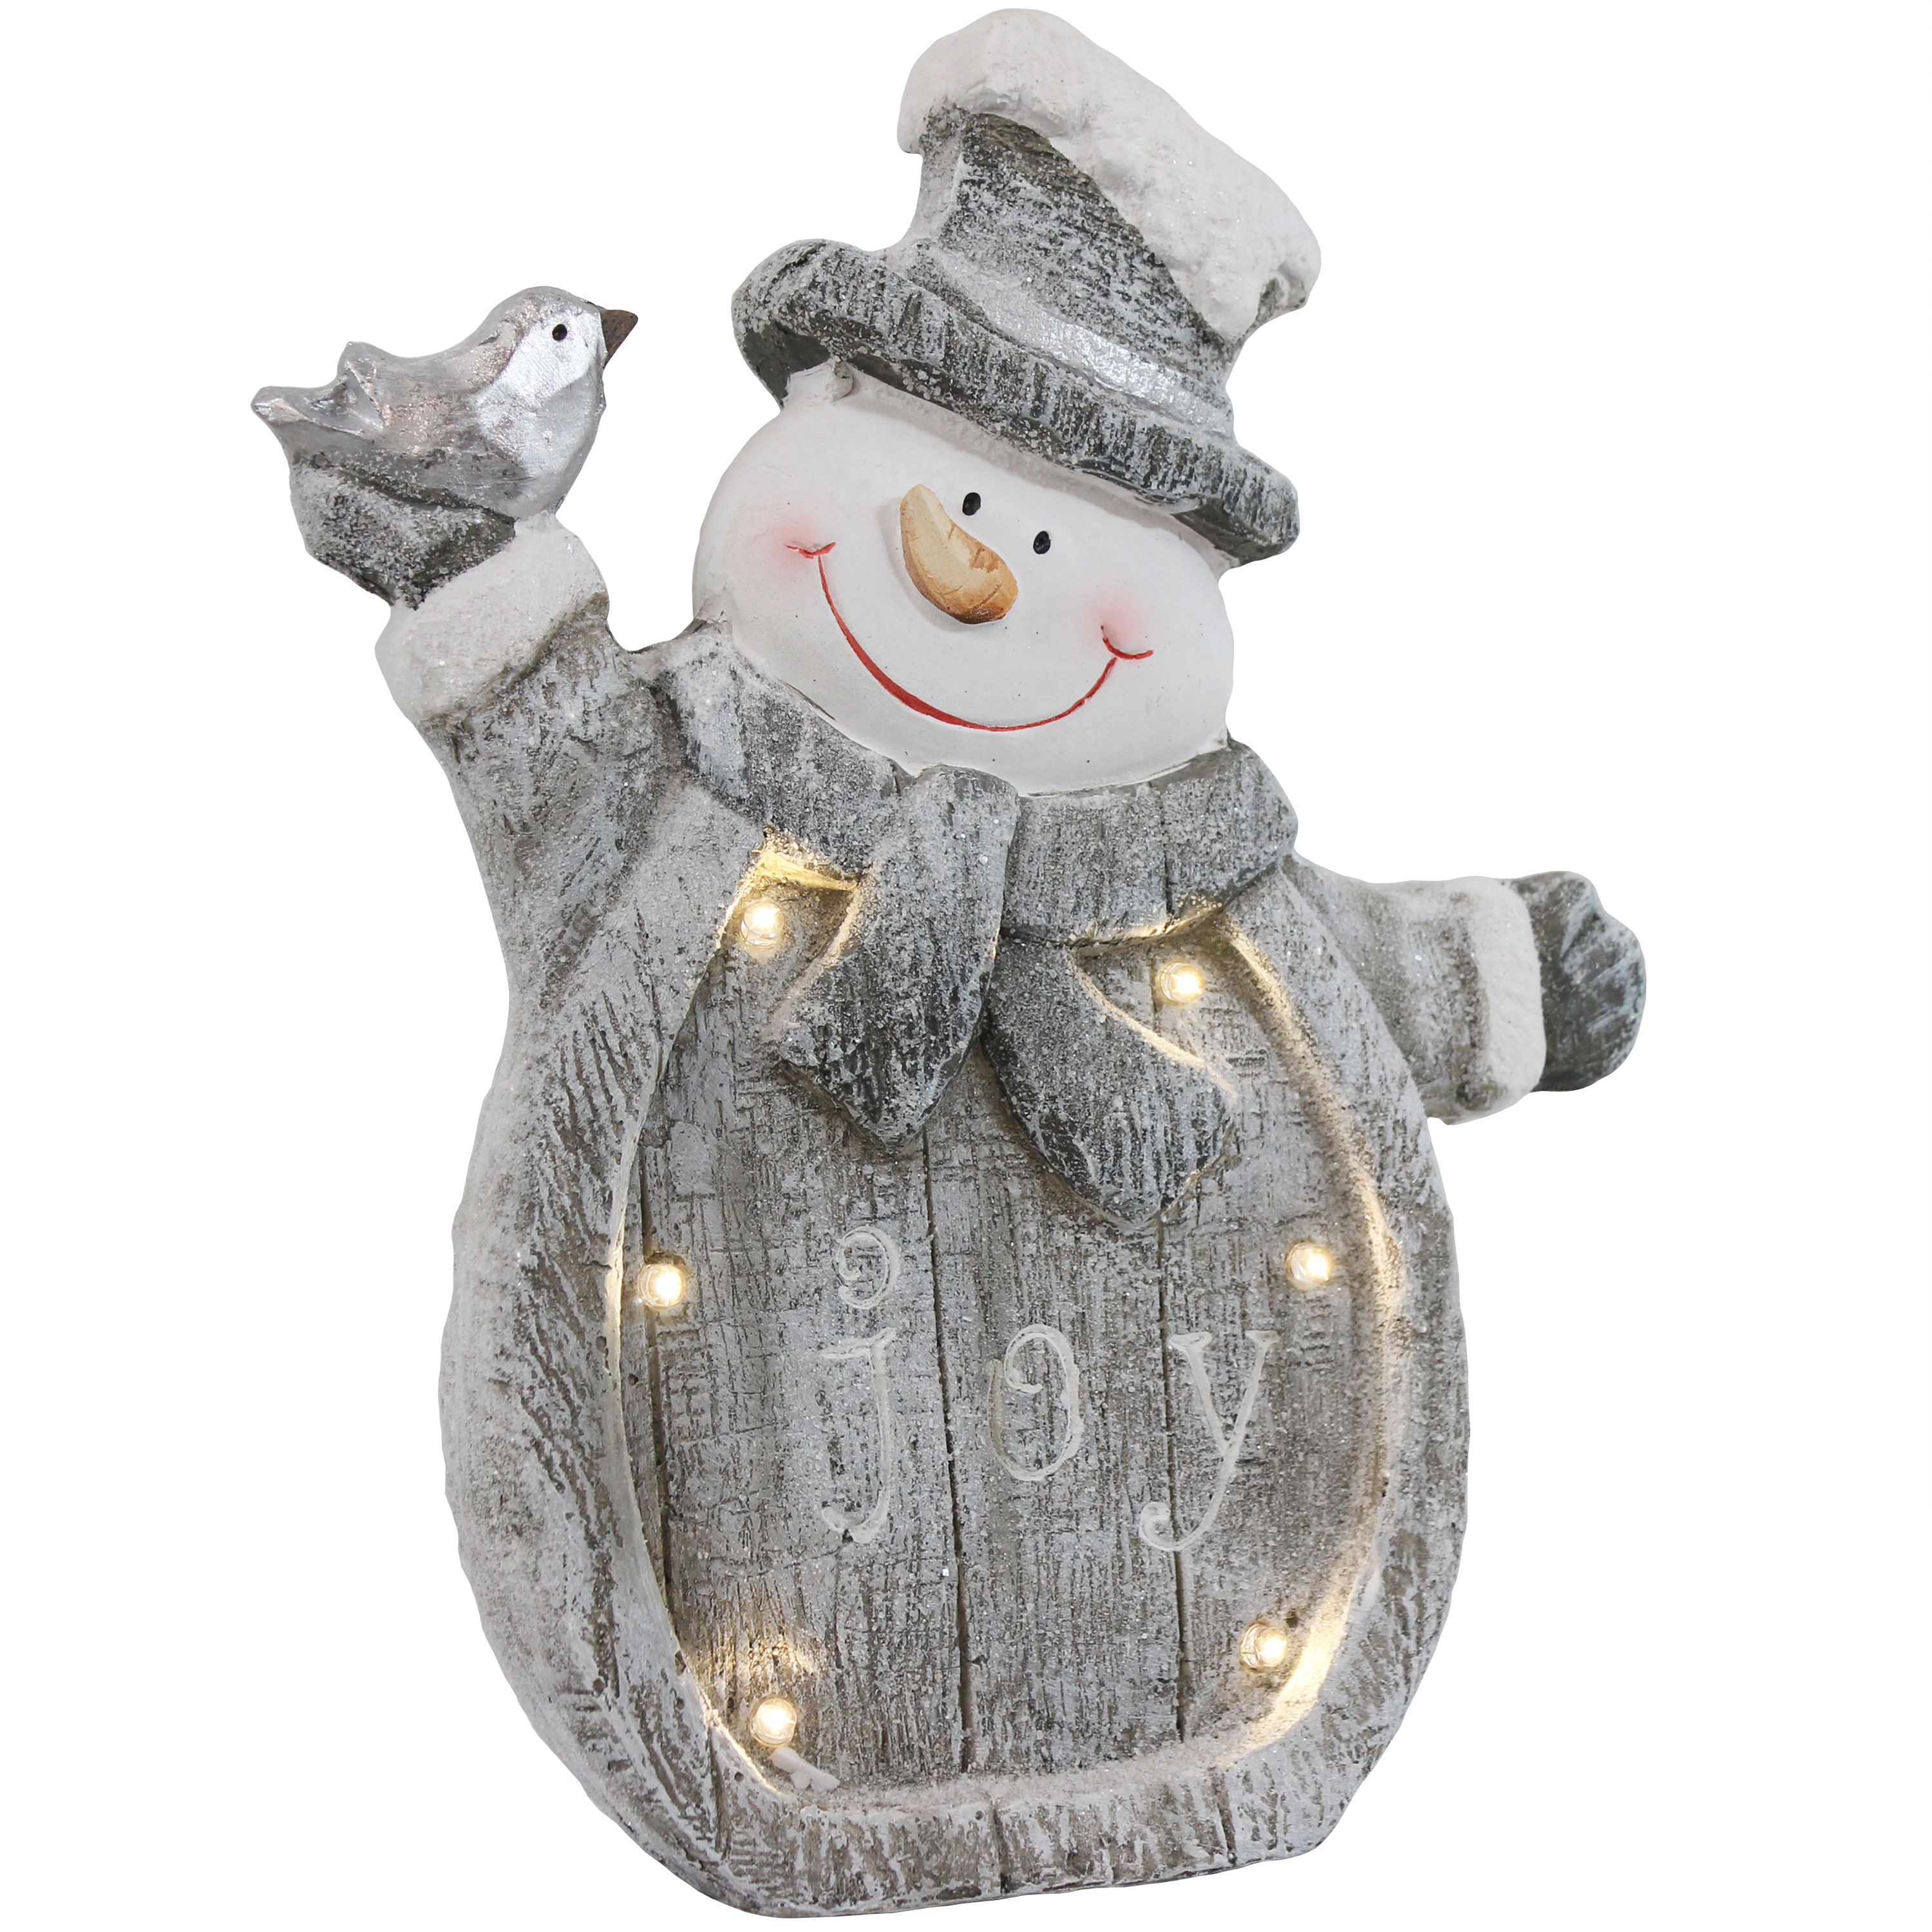 Sunnydaze Decor 15.25-in Figurine Snowman Battery-operated Christmas Decor